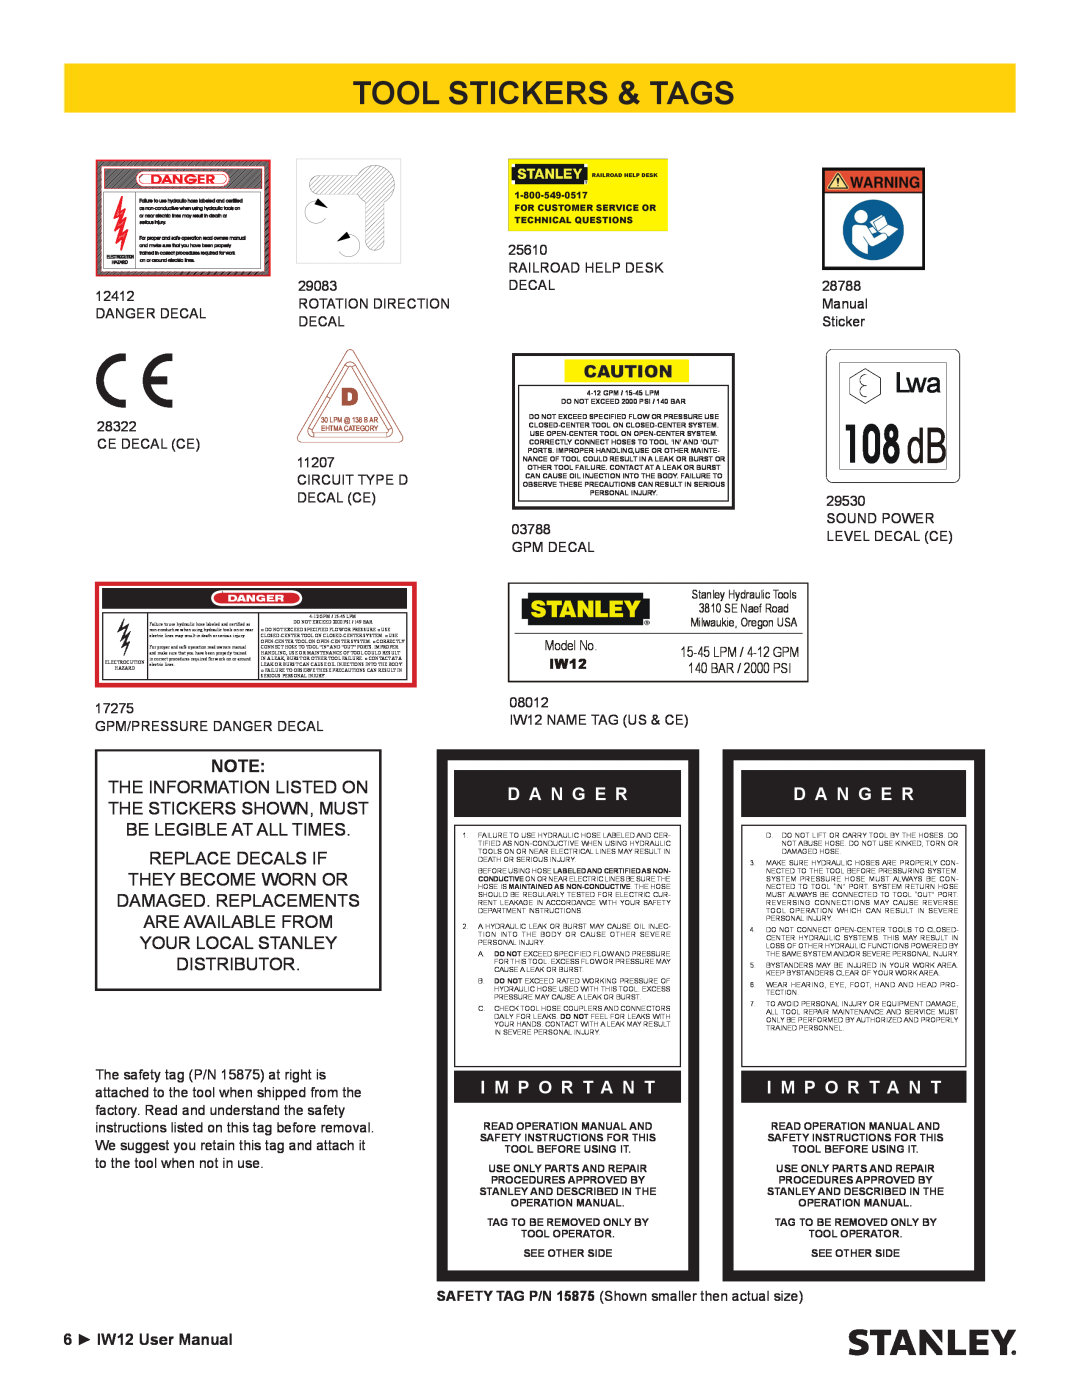 Stanley Black & Decker IW12 user manual Tool Stickers & Tags, D A N G E R, I M P O R T A N T 